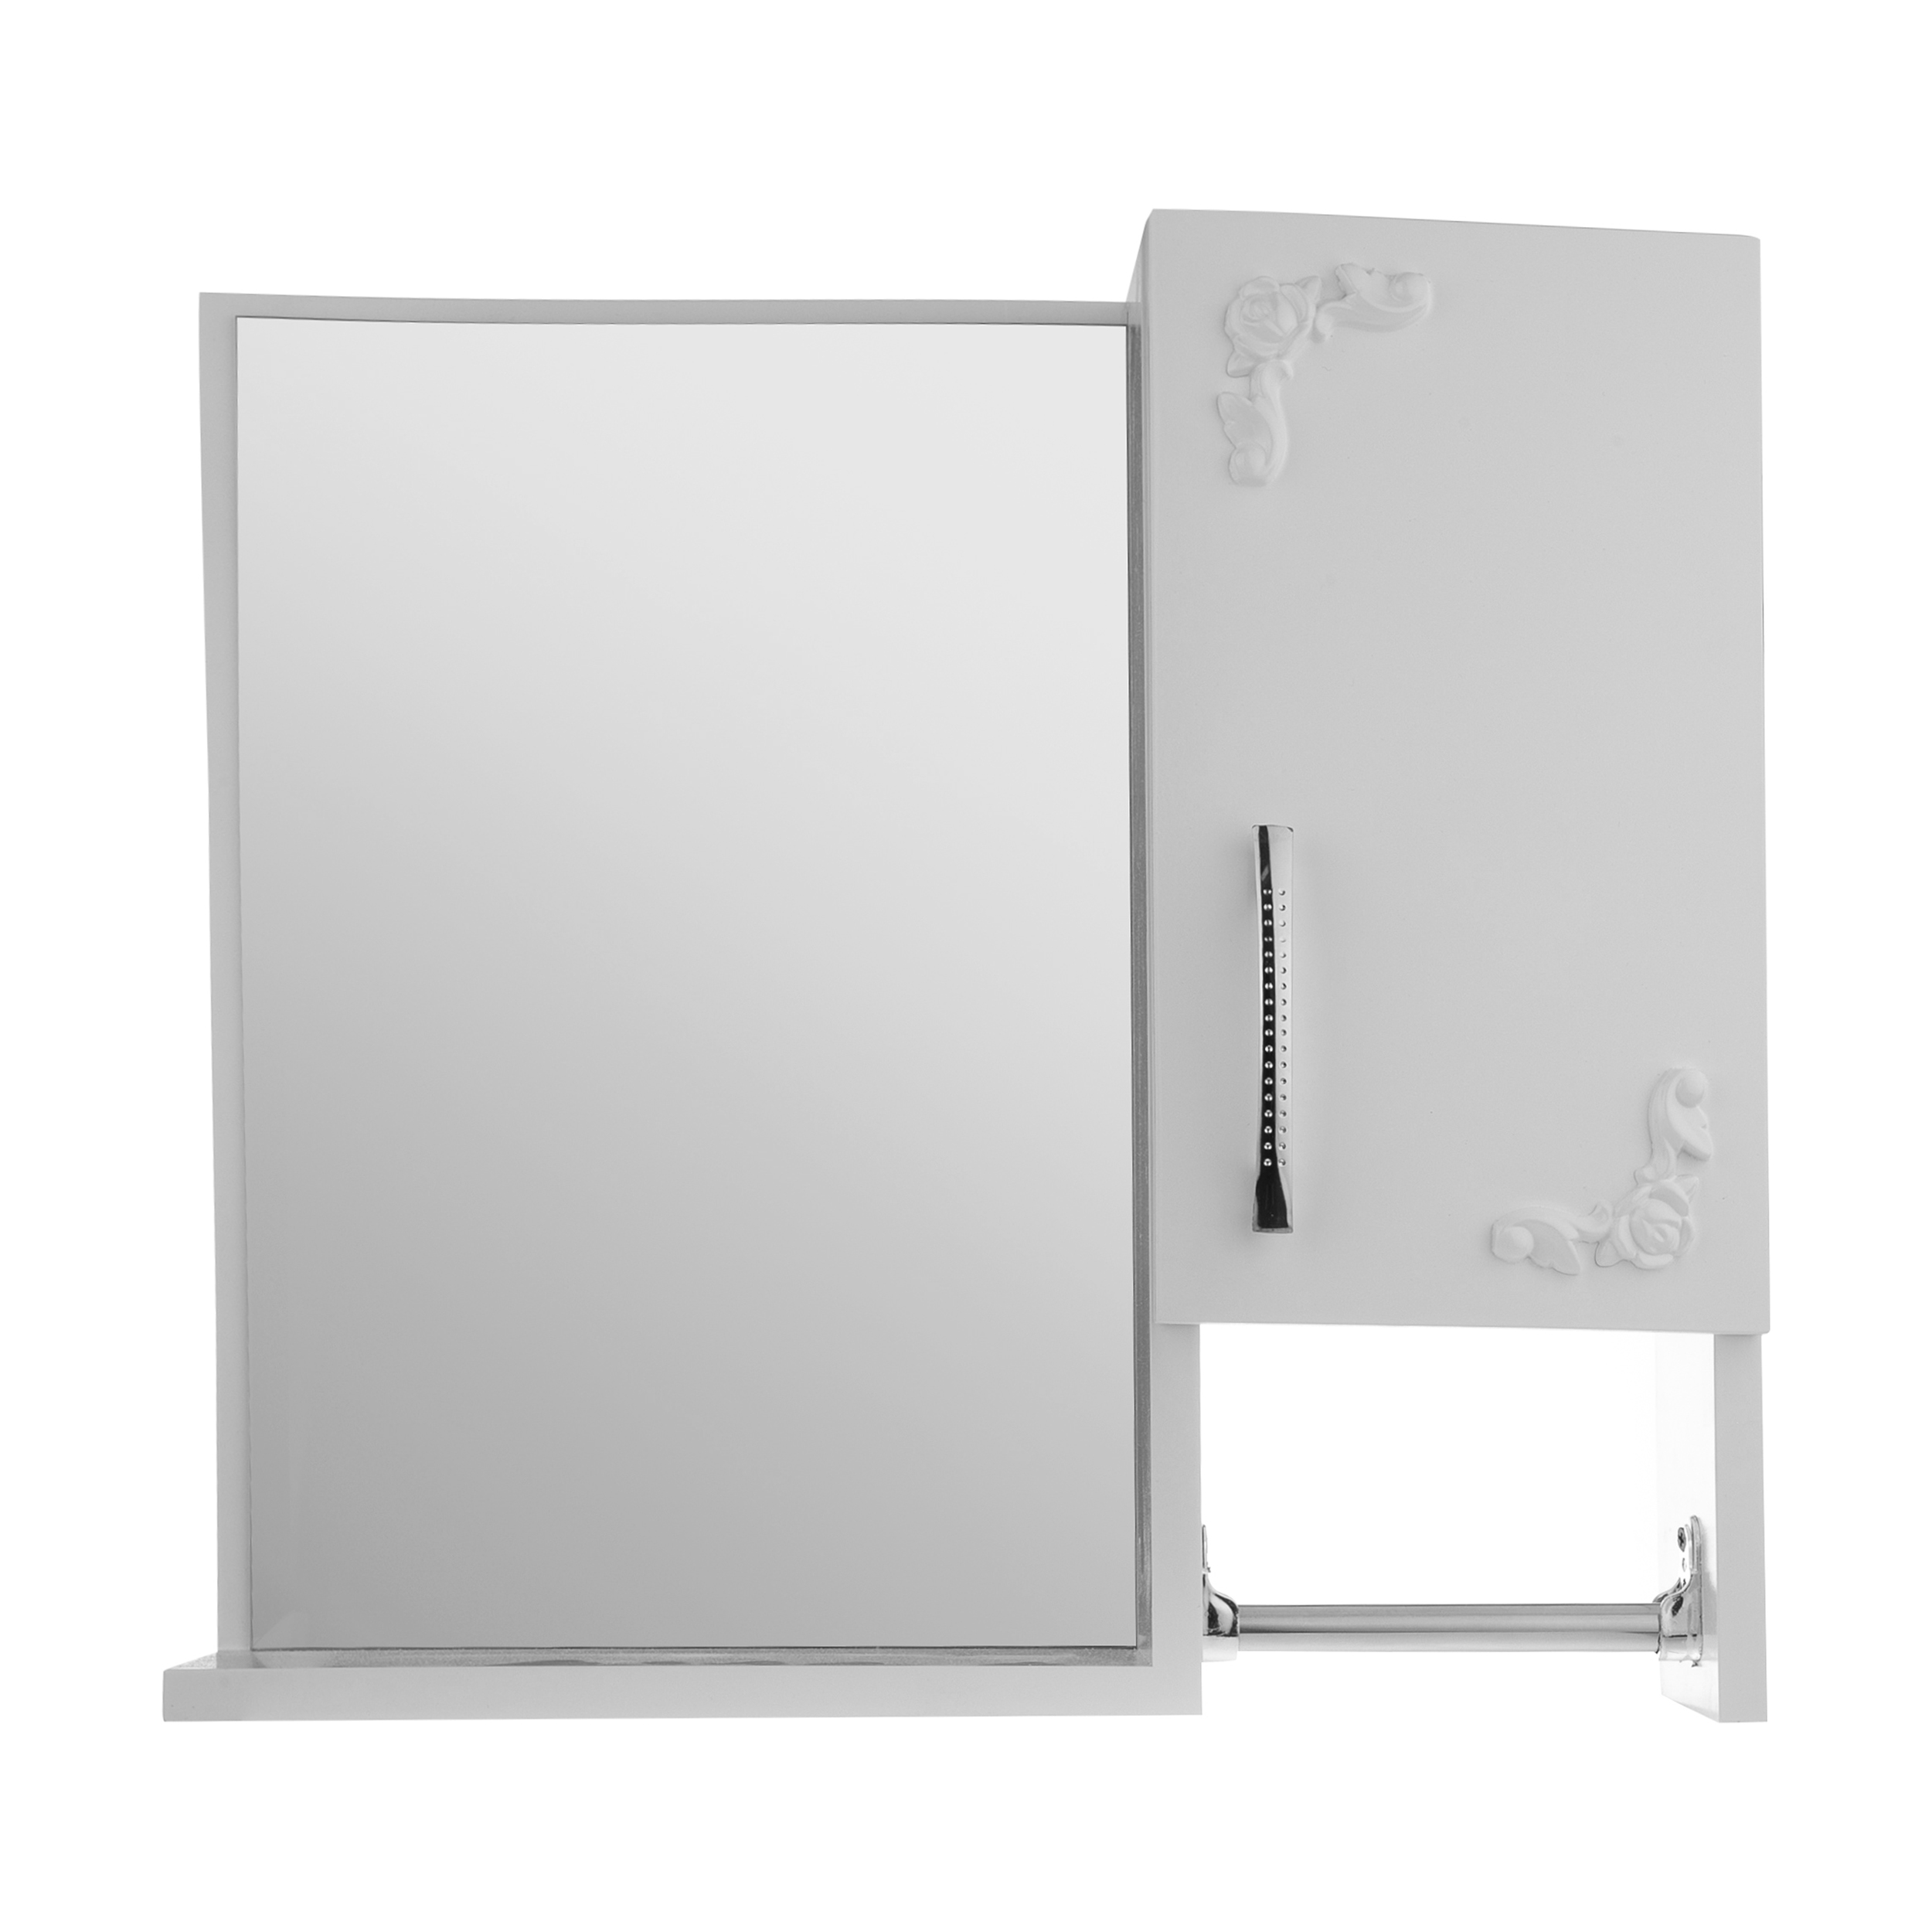 ست آینه و باکس مدل فلاور کد A50